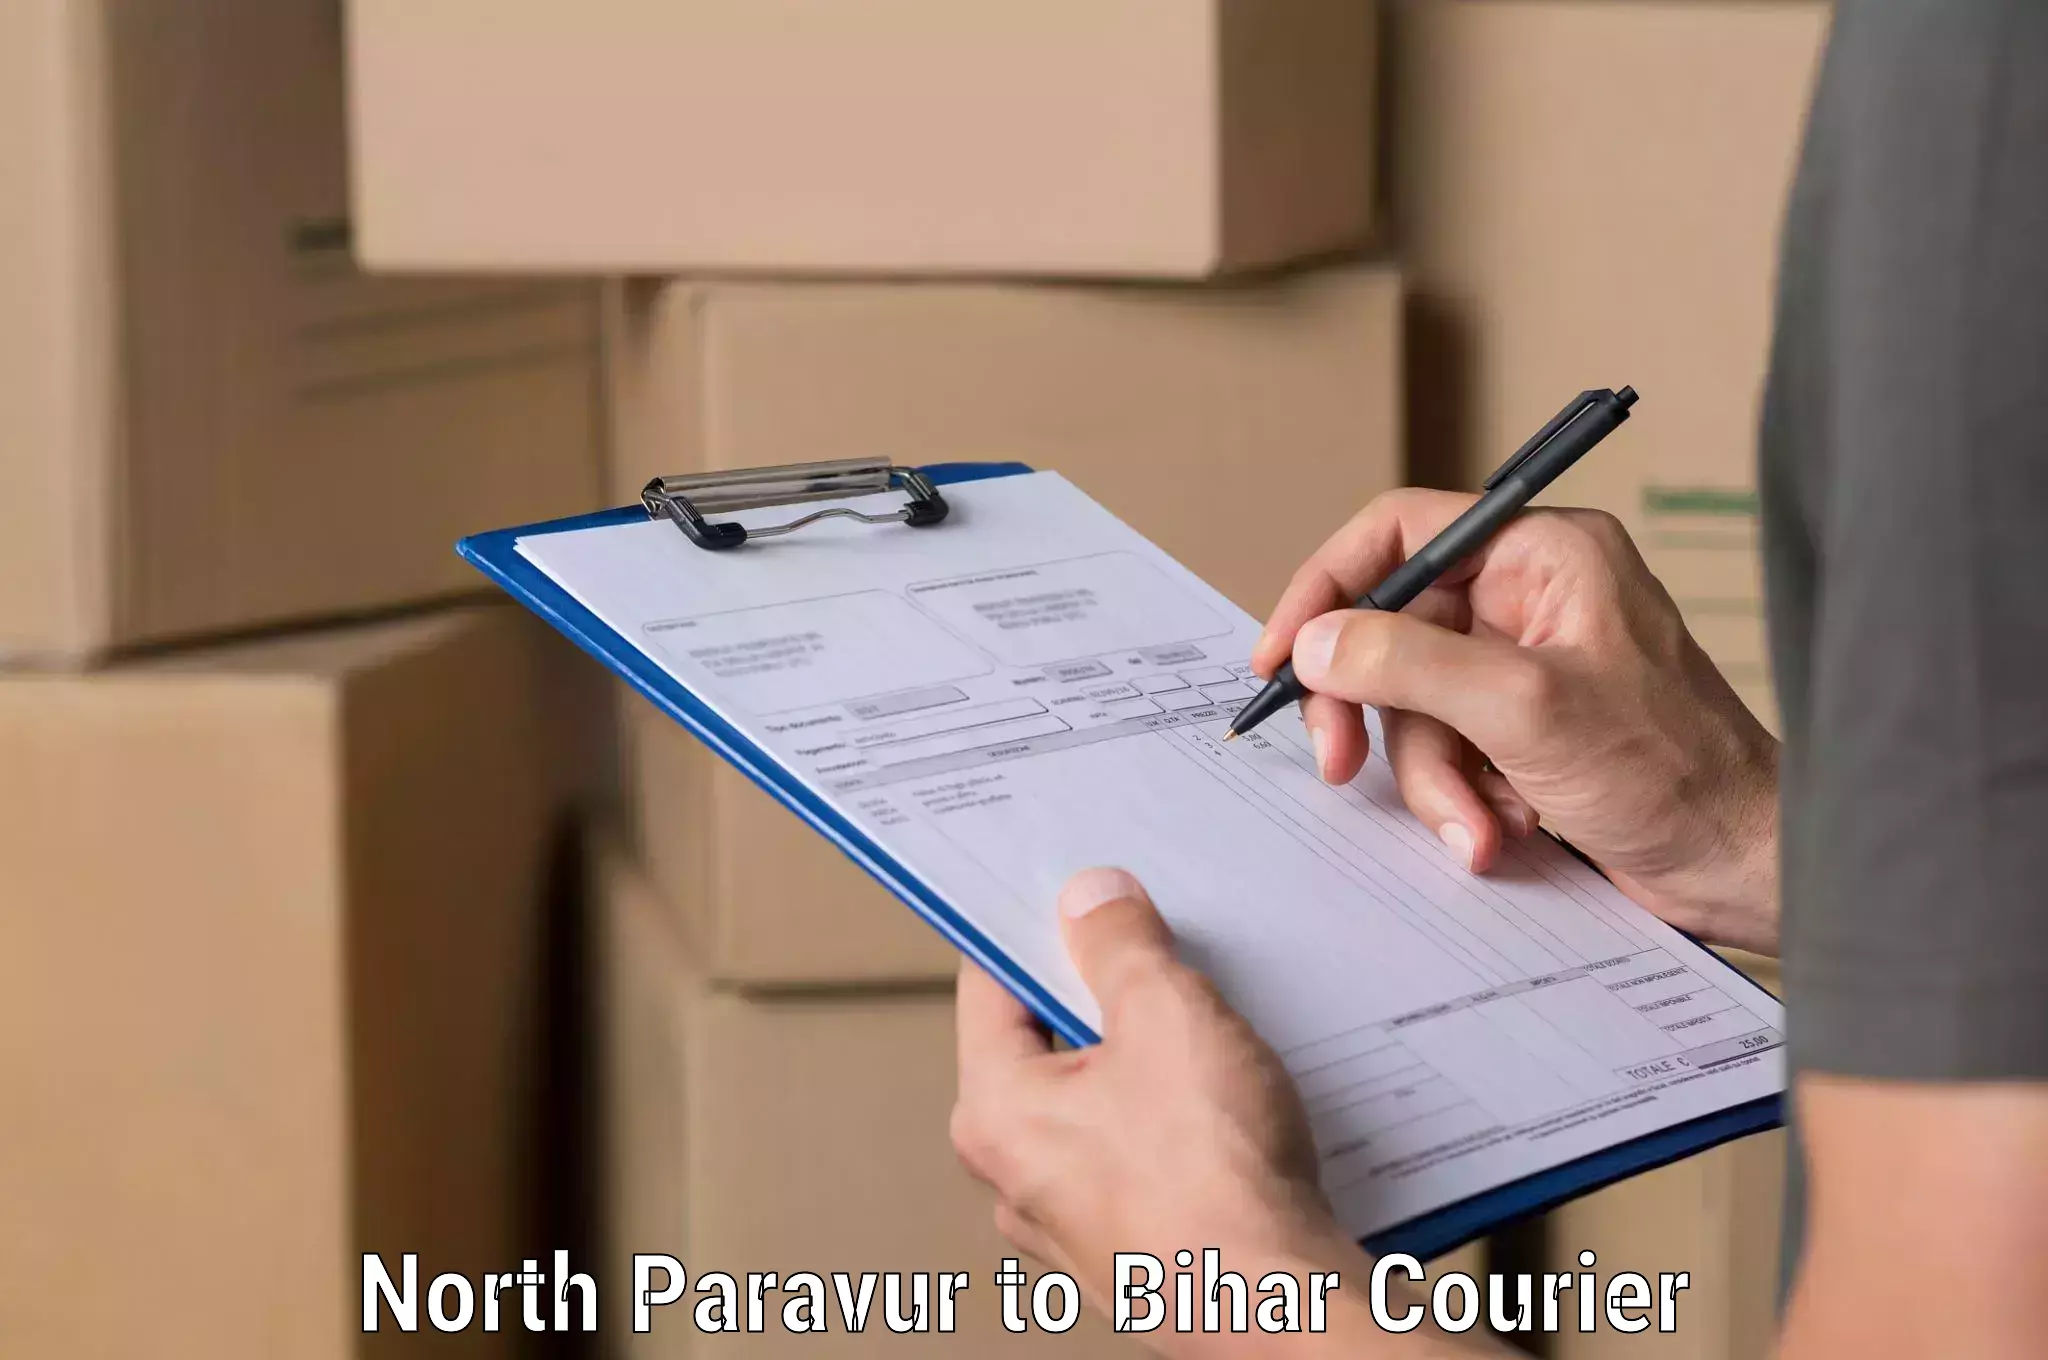 Courier service innovation North Paravur to Valmiki Nagar